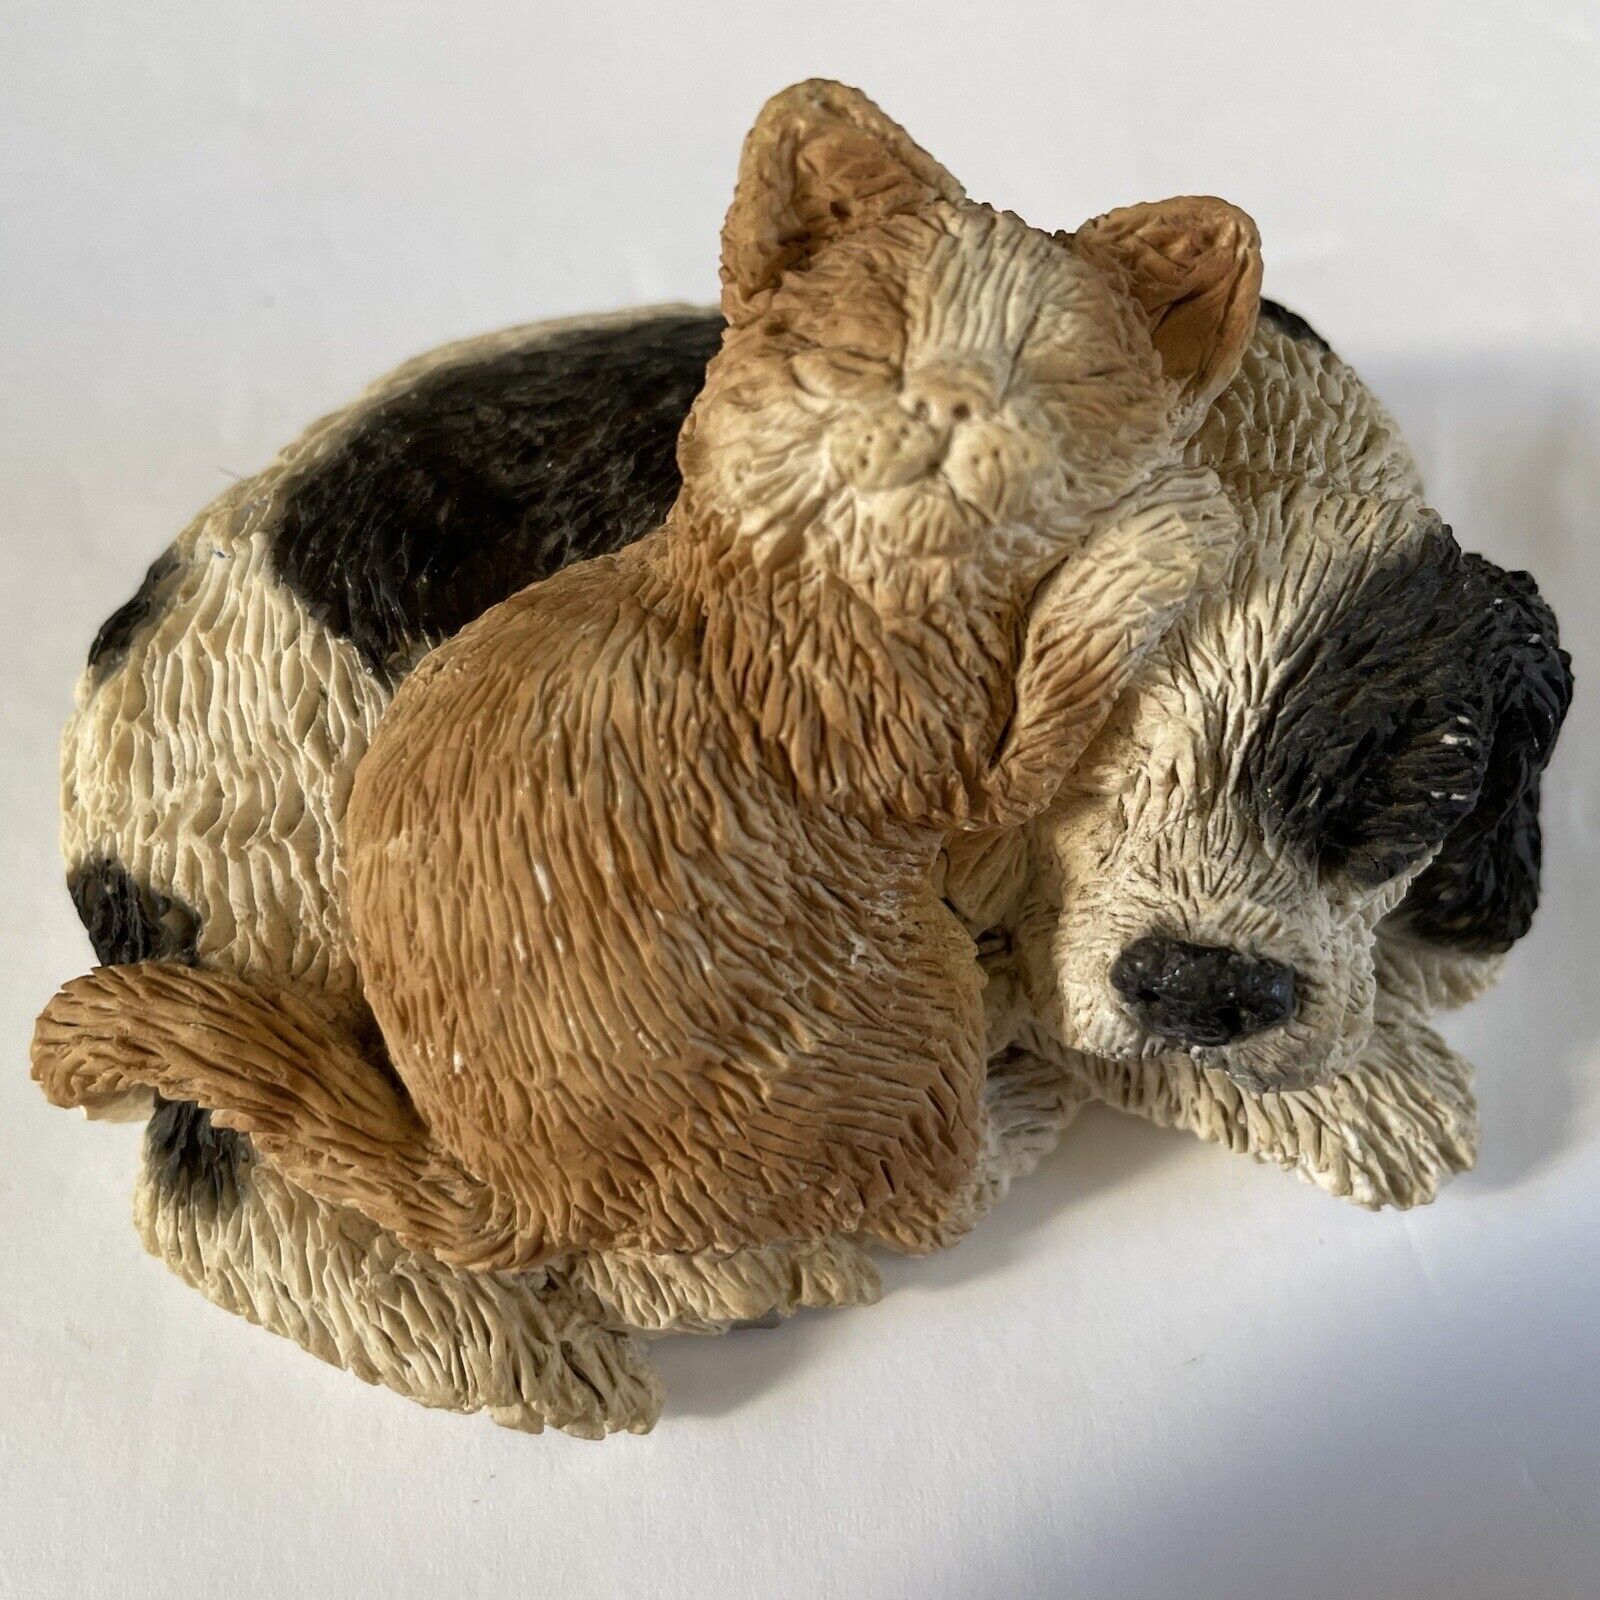 Stone Critters SC-754 Dog & Cat Sleeping Figurine Handpainted United Design Corp